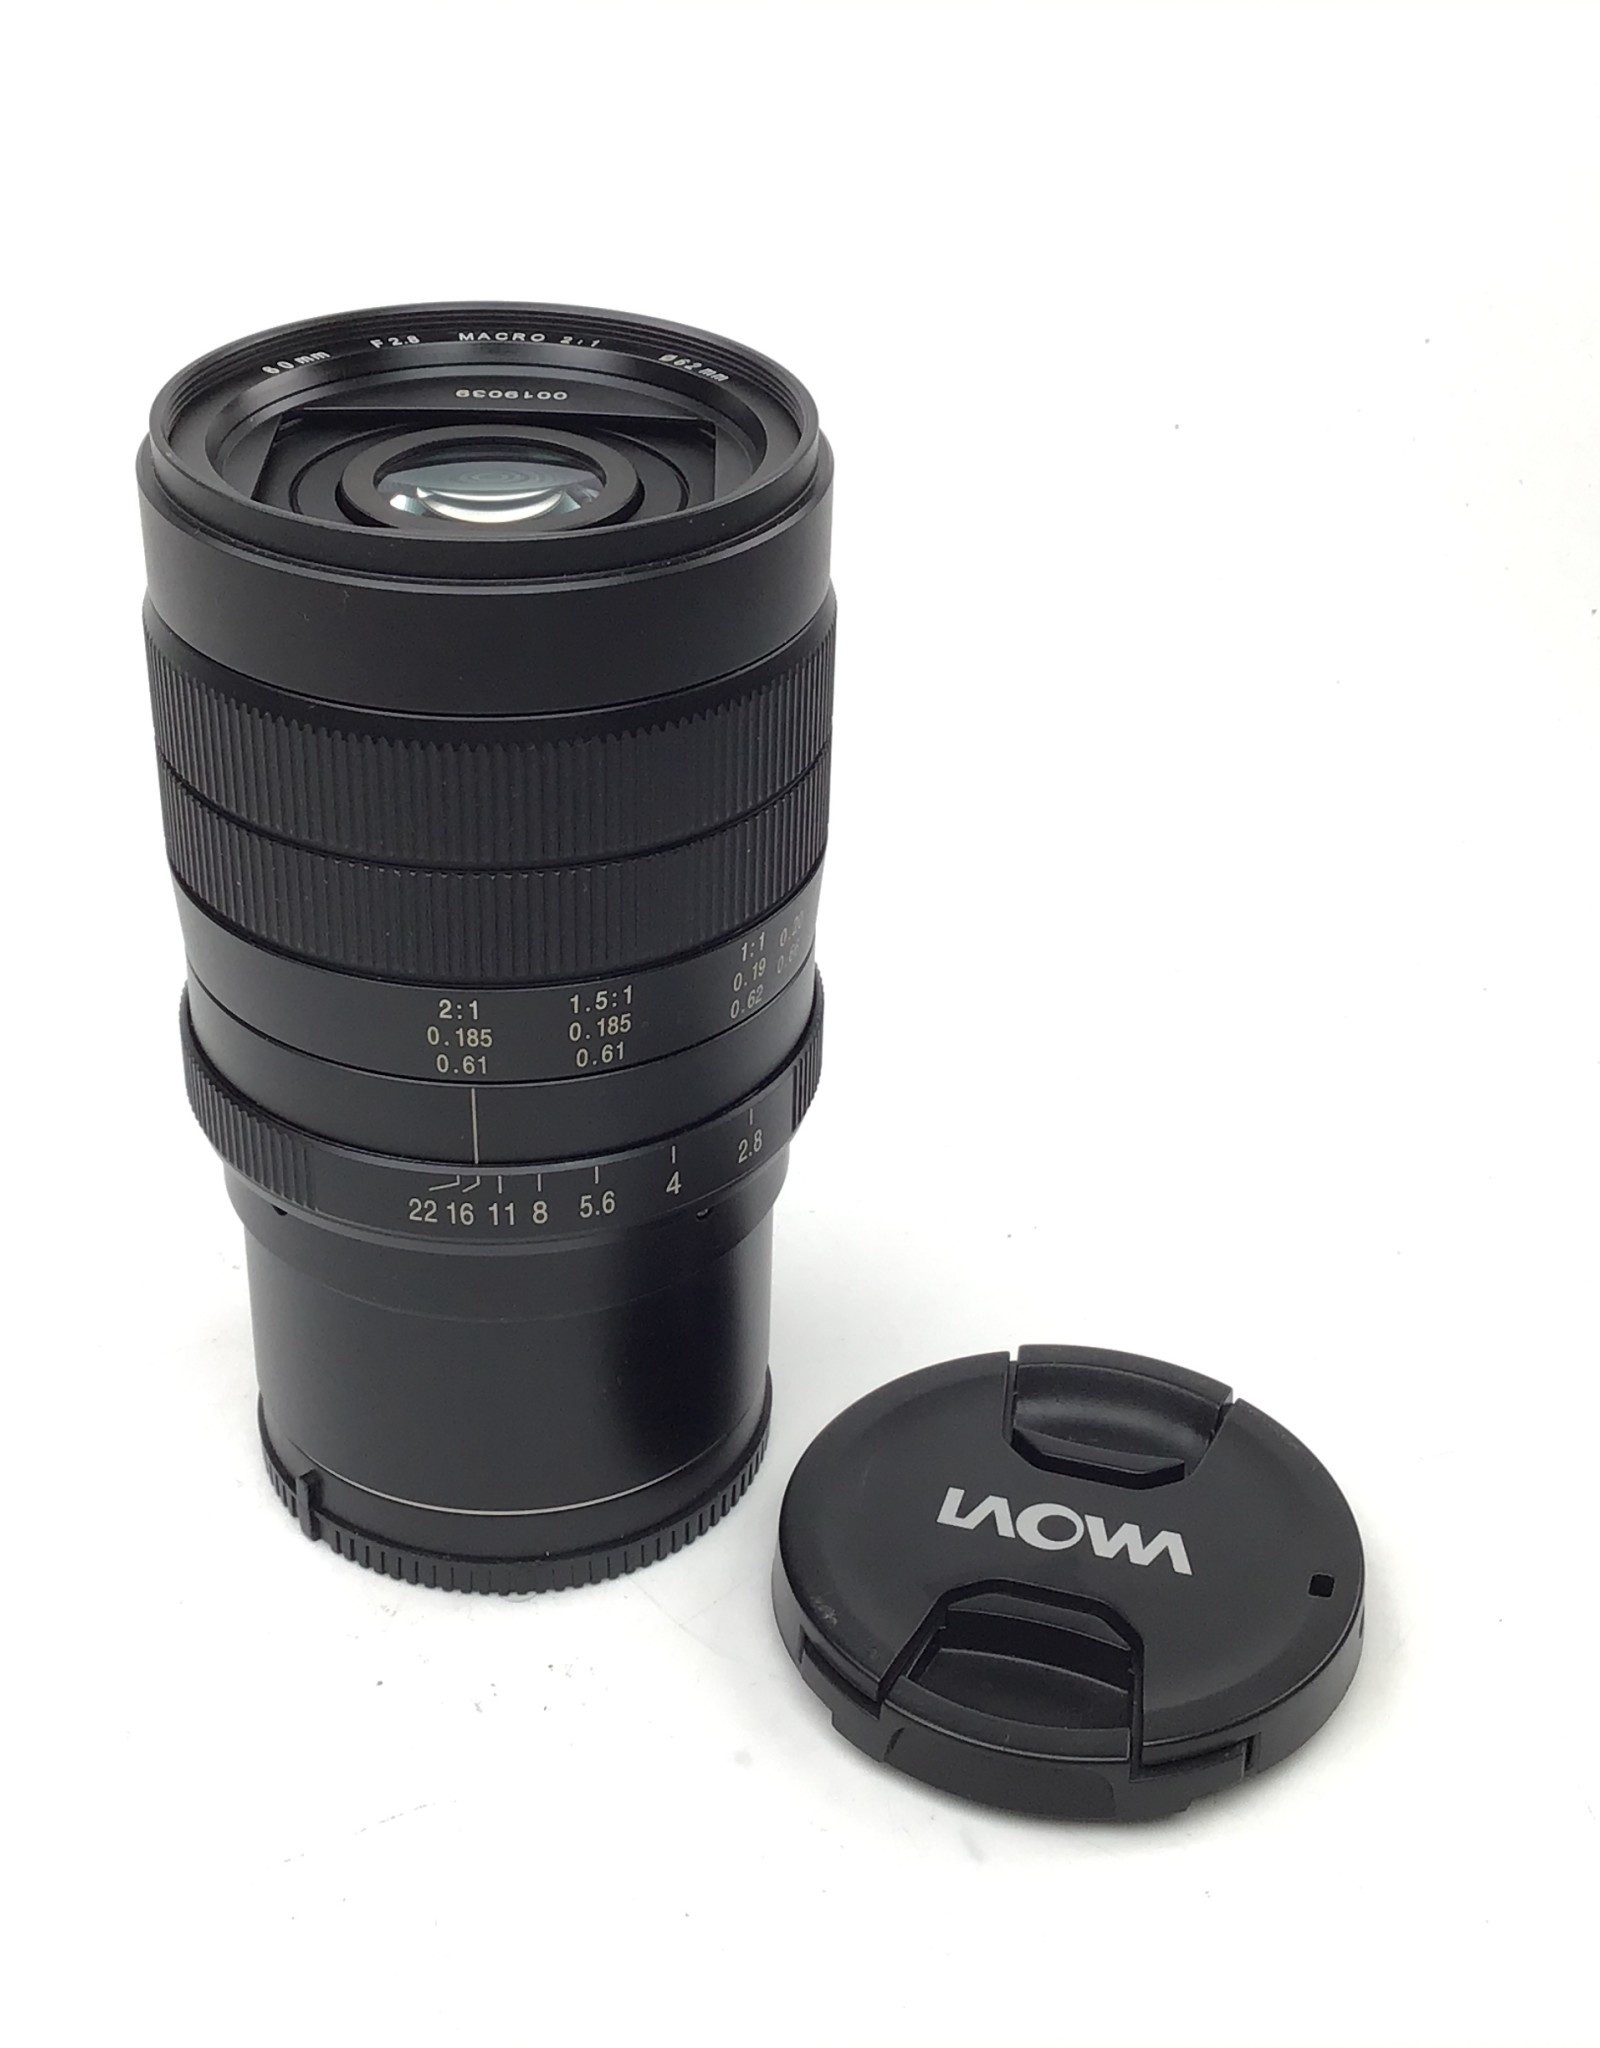 Laowa 60mm f2.8 Macro 2:1 Lens for Sony Used Good